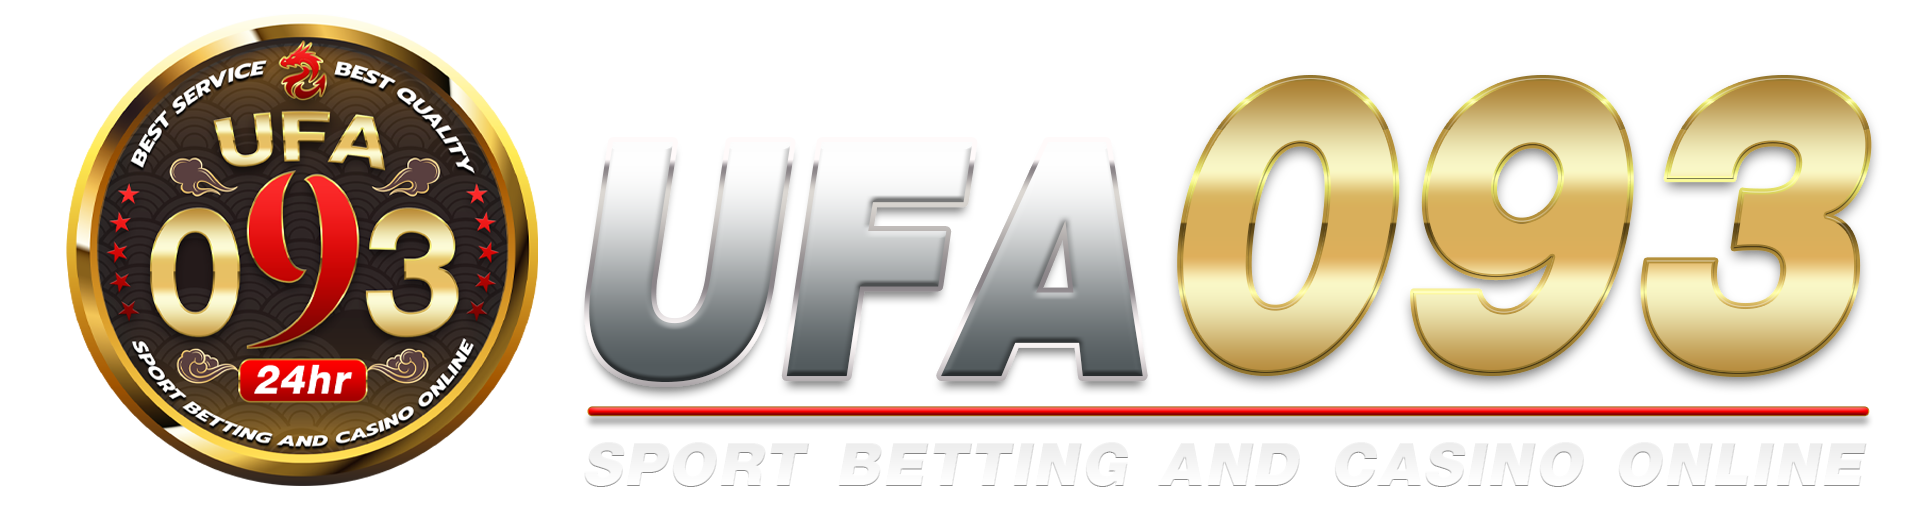 UFA093 logo